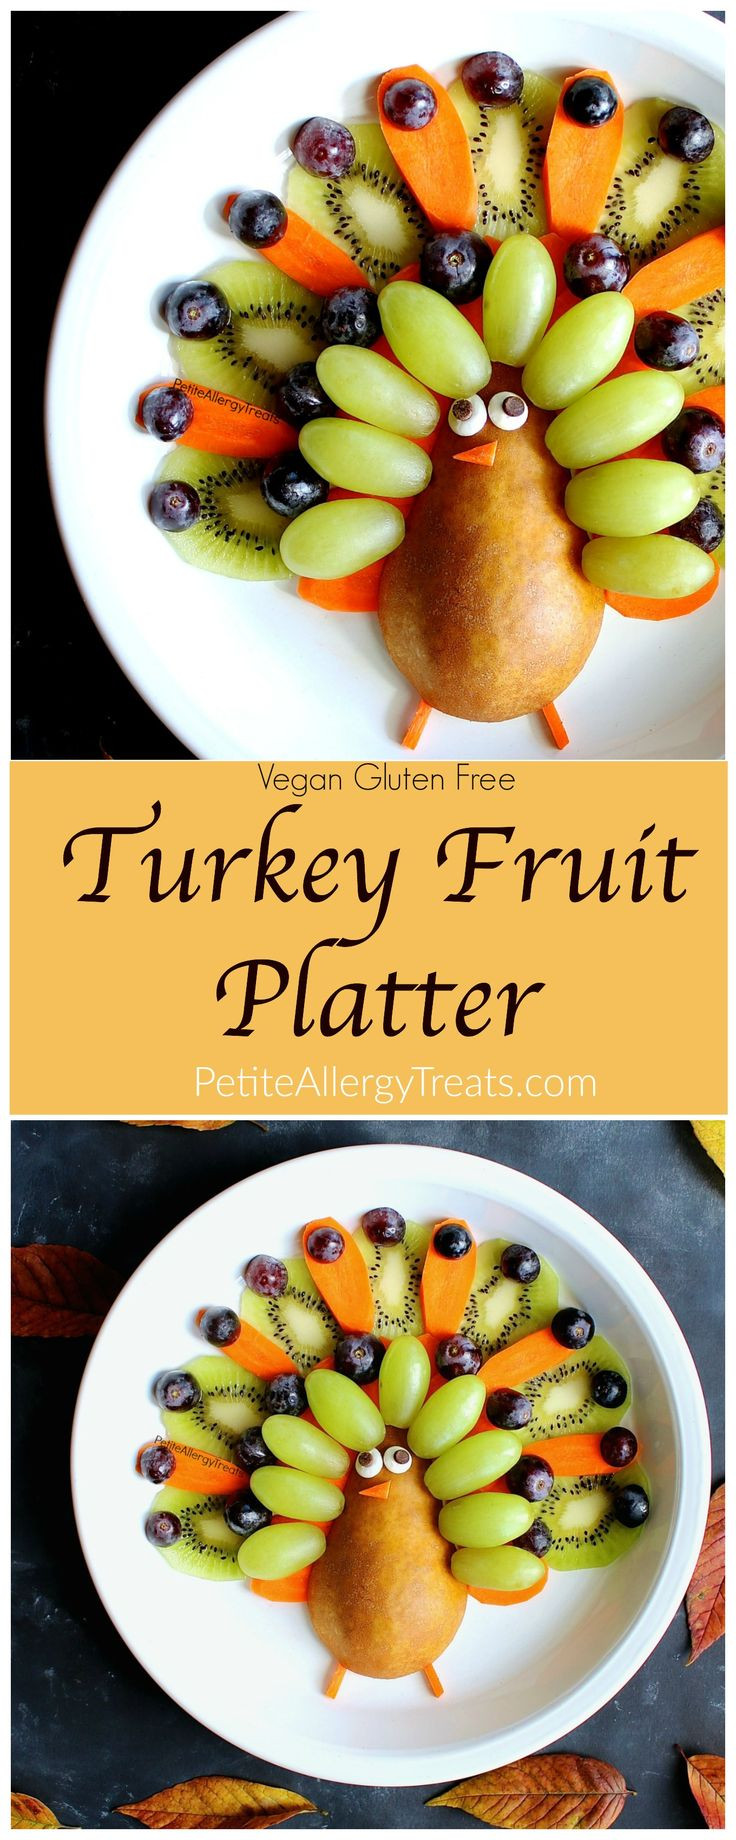 Vegan Gluten Free Thanksgiving
 25 best ideas about Turkey Fruit Platter on Pinterest